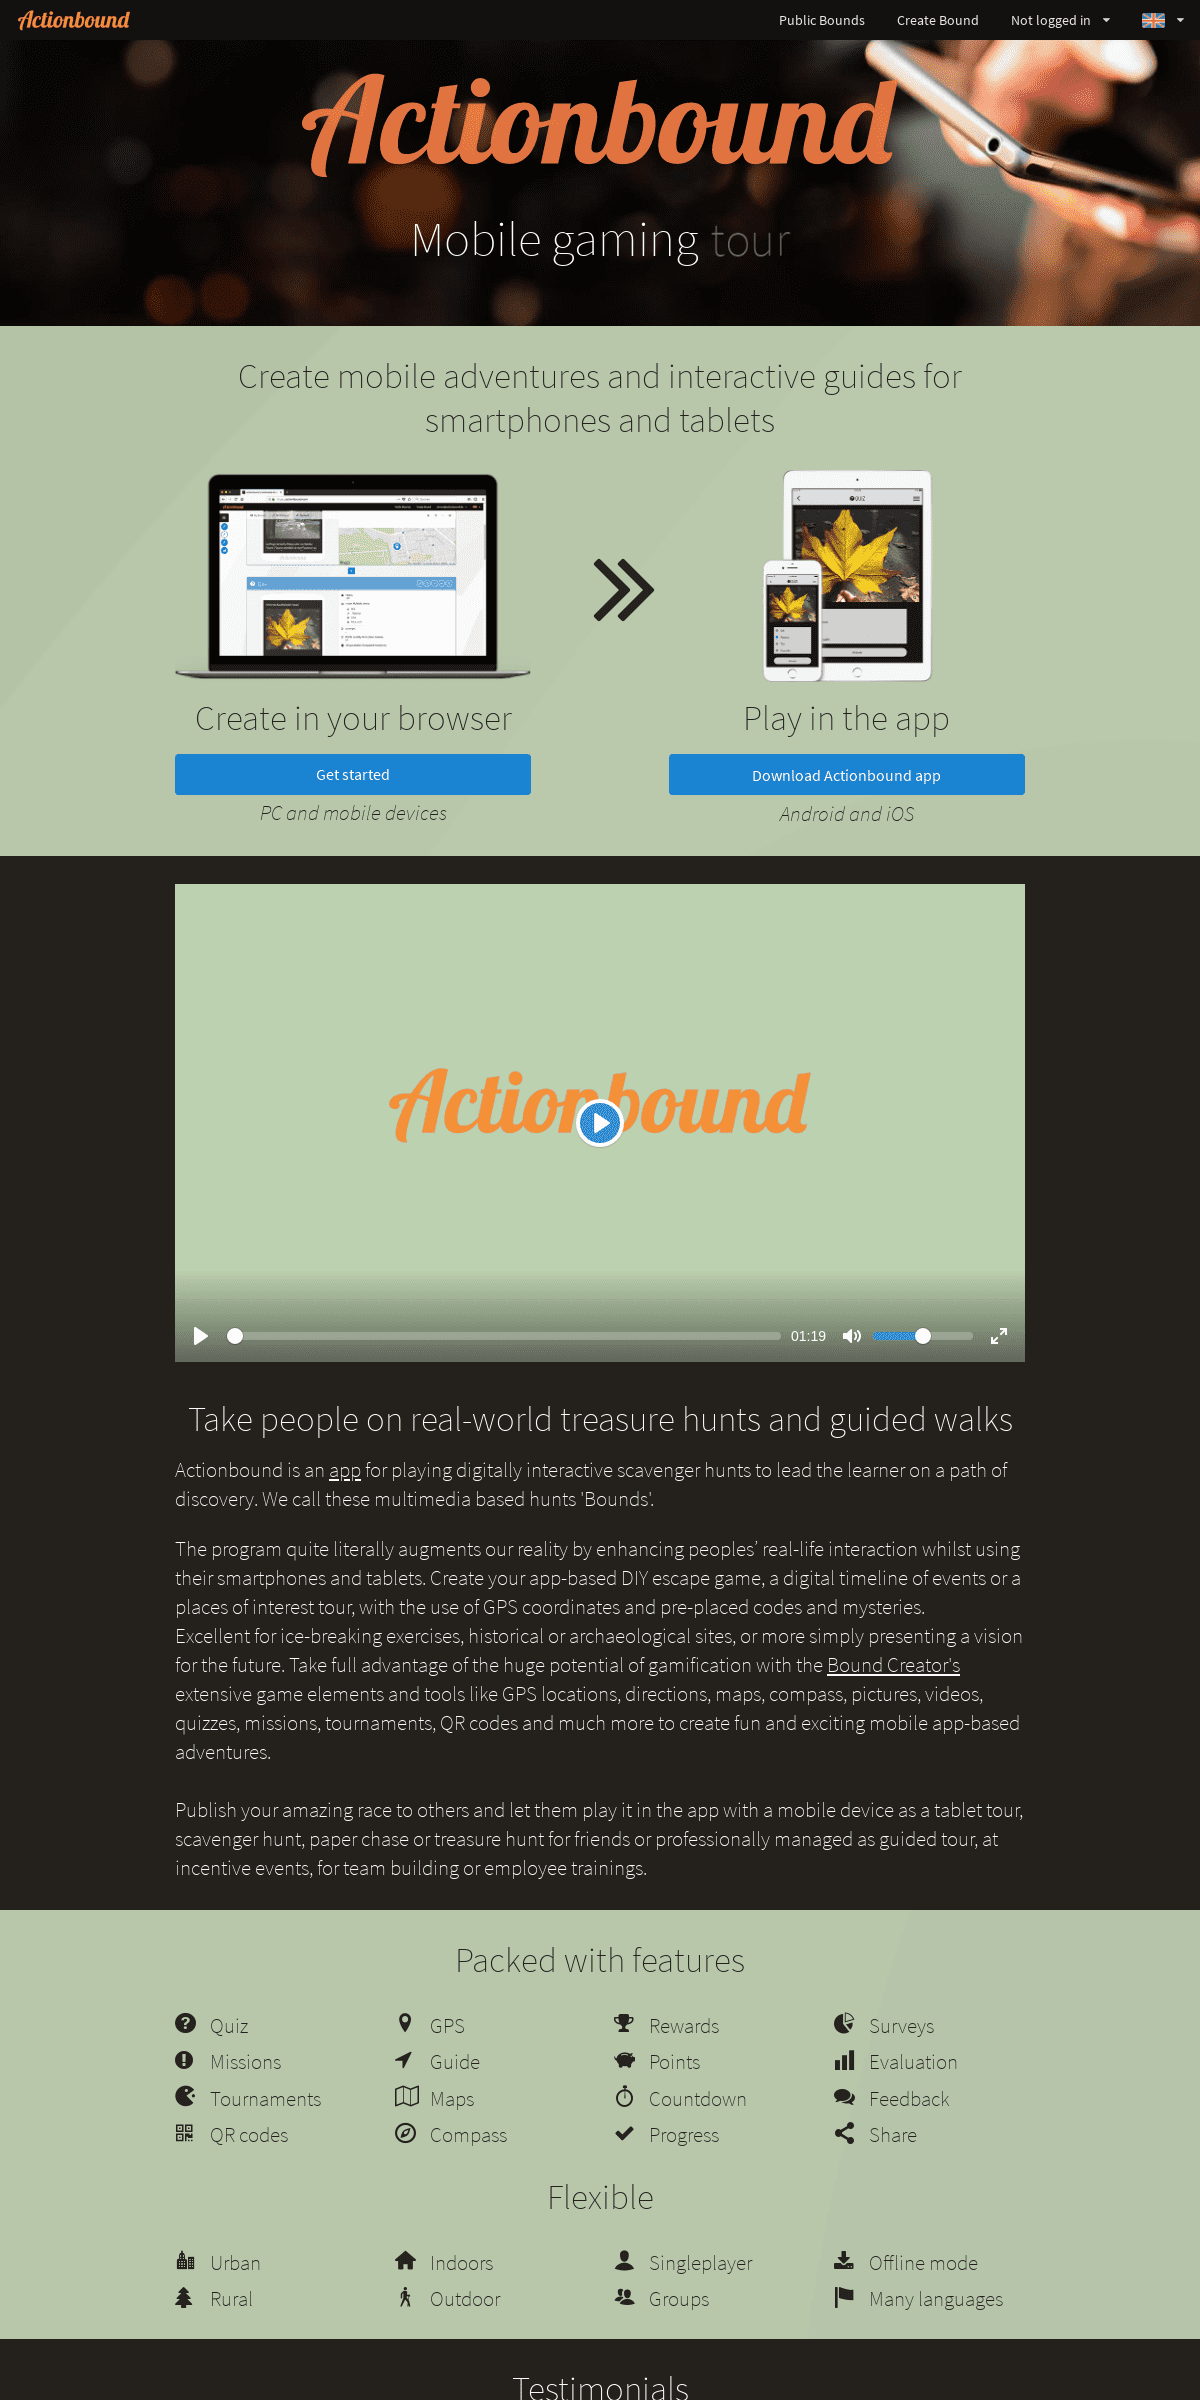 A complete backup of actionbound.com